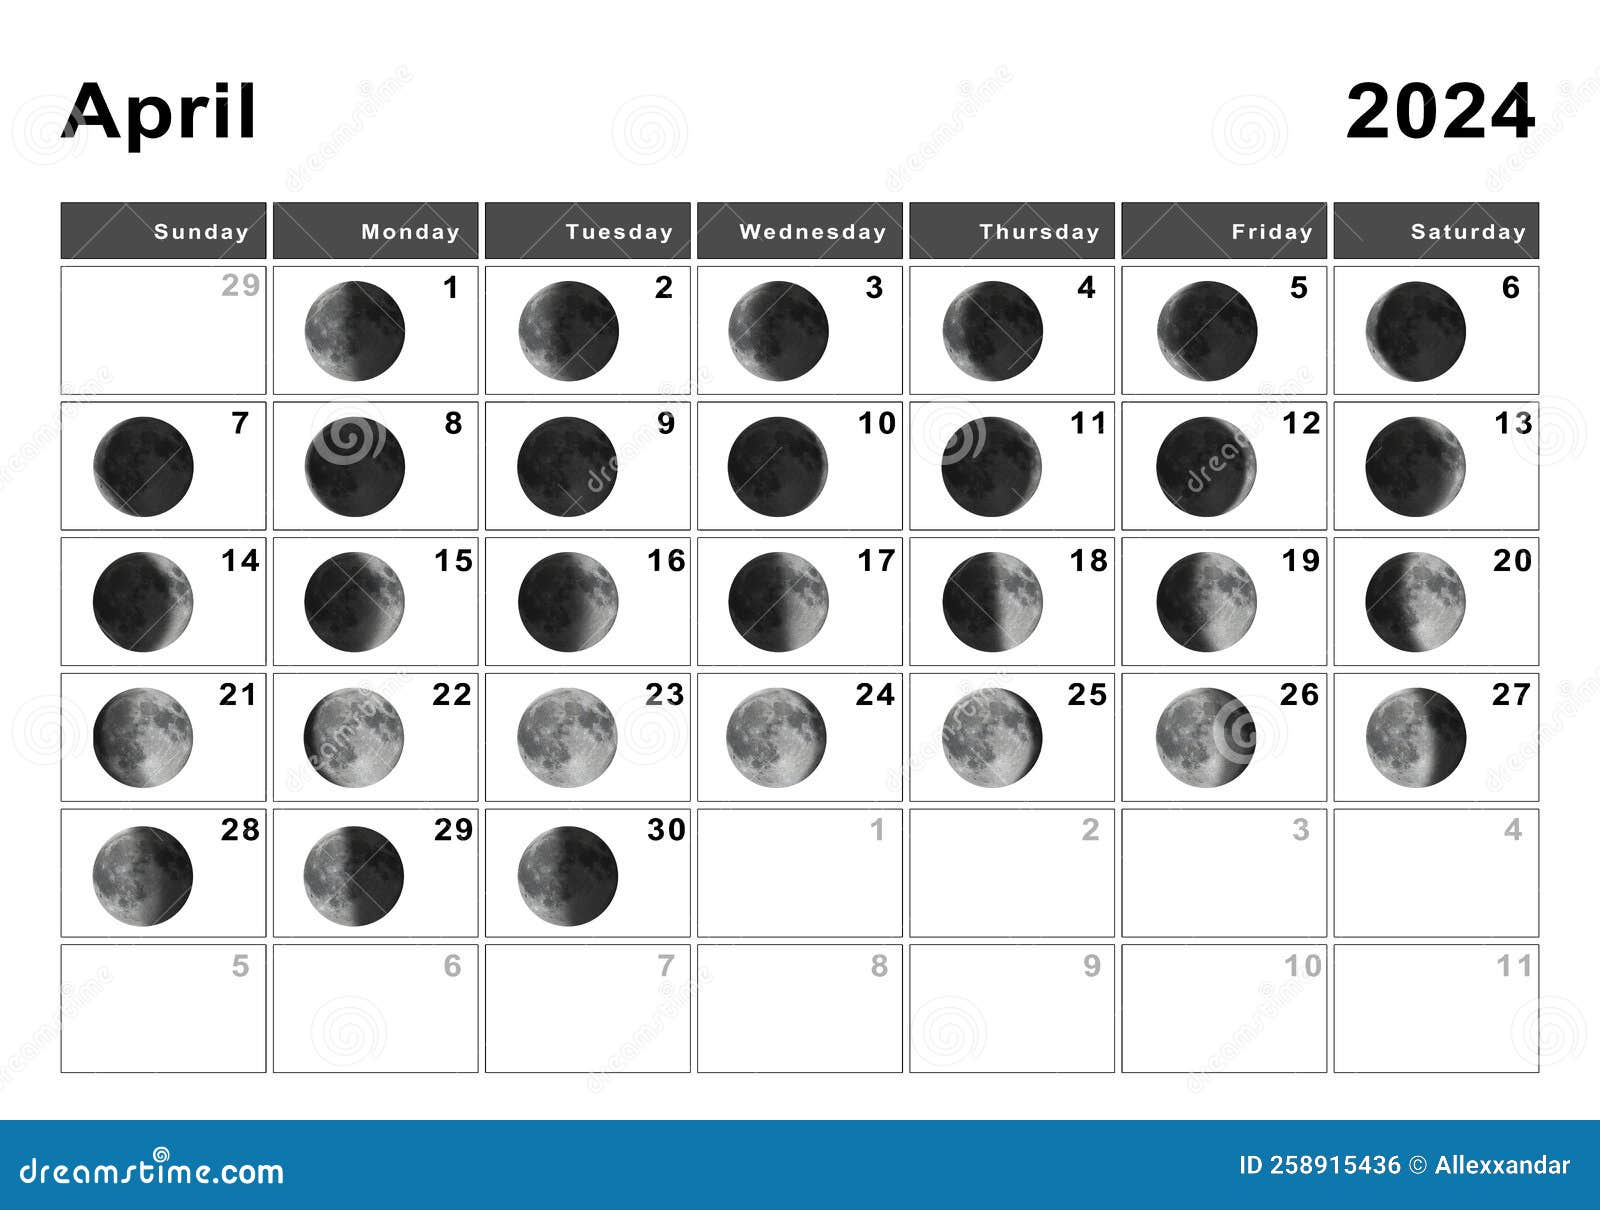 April 2024 Lunar Calendar, Moon Cycles Stock Illustration in Lunar Calendar April 2024